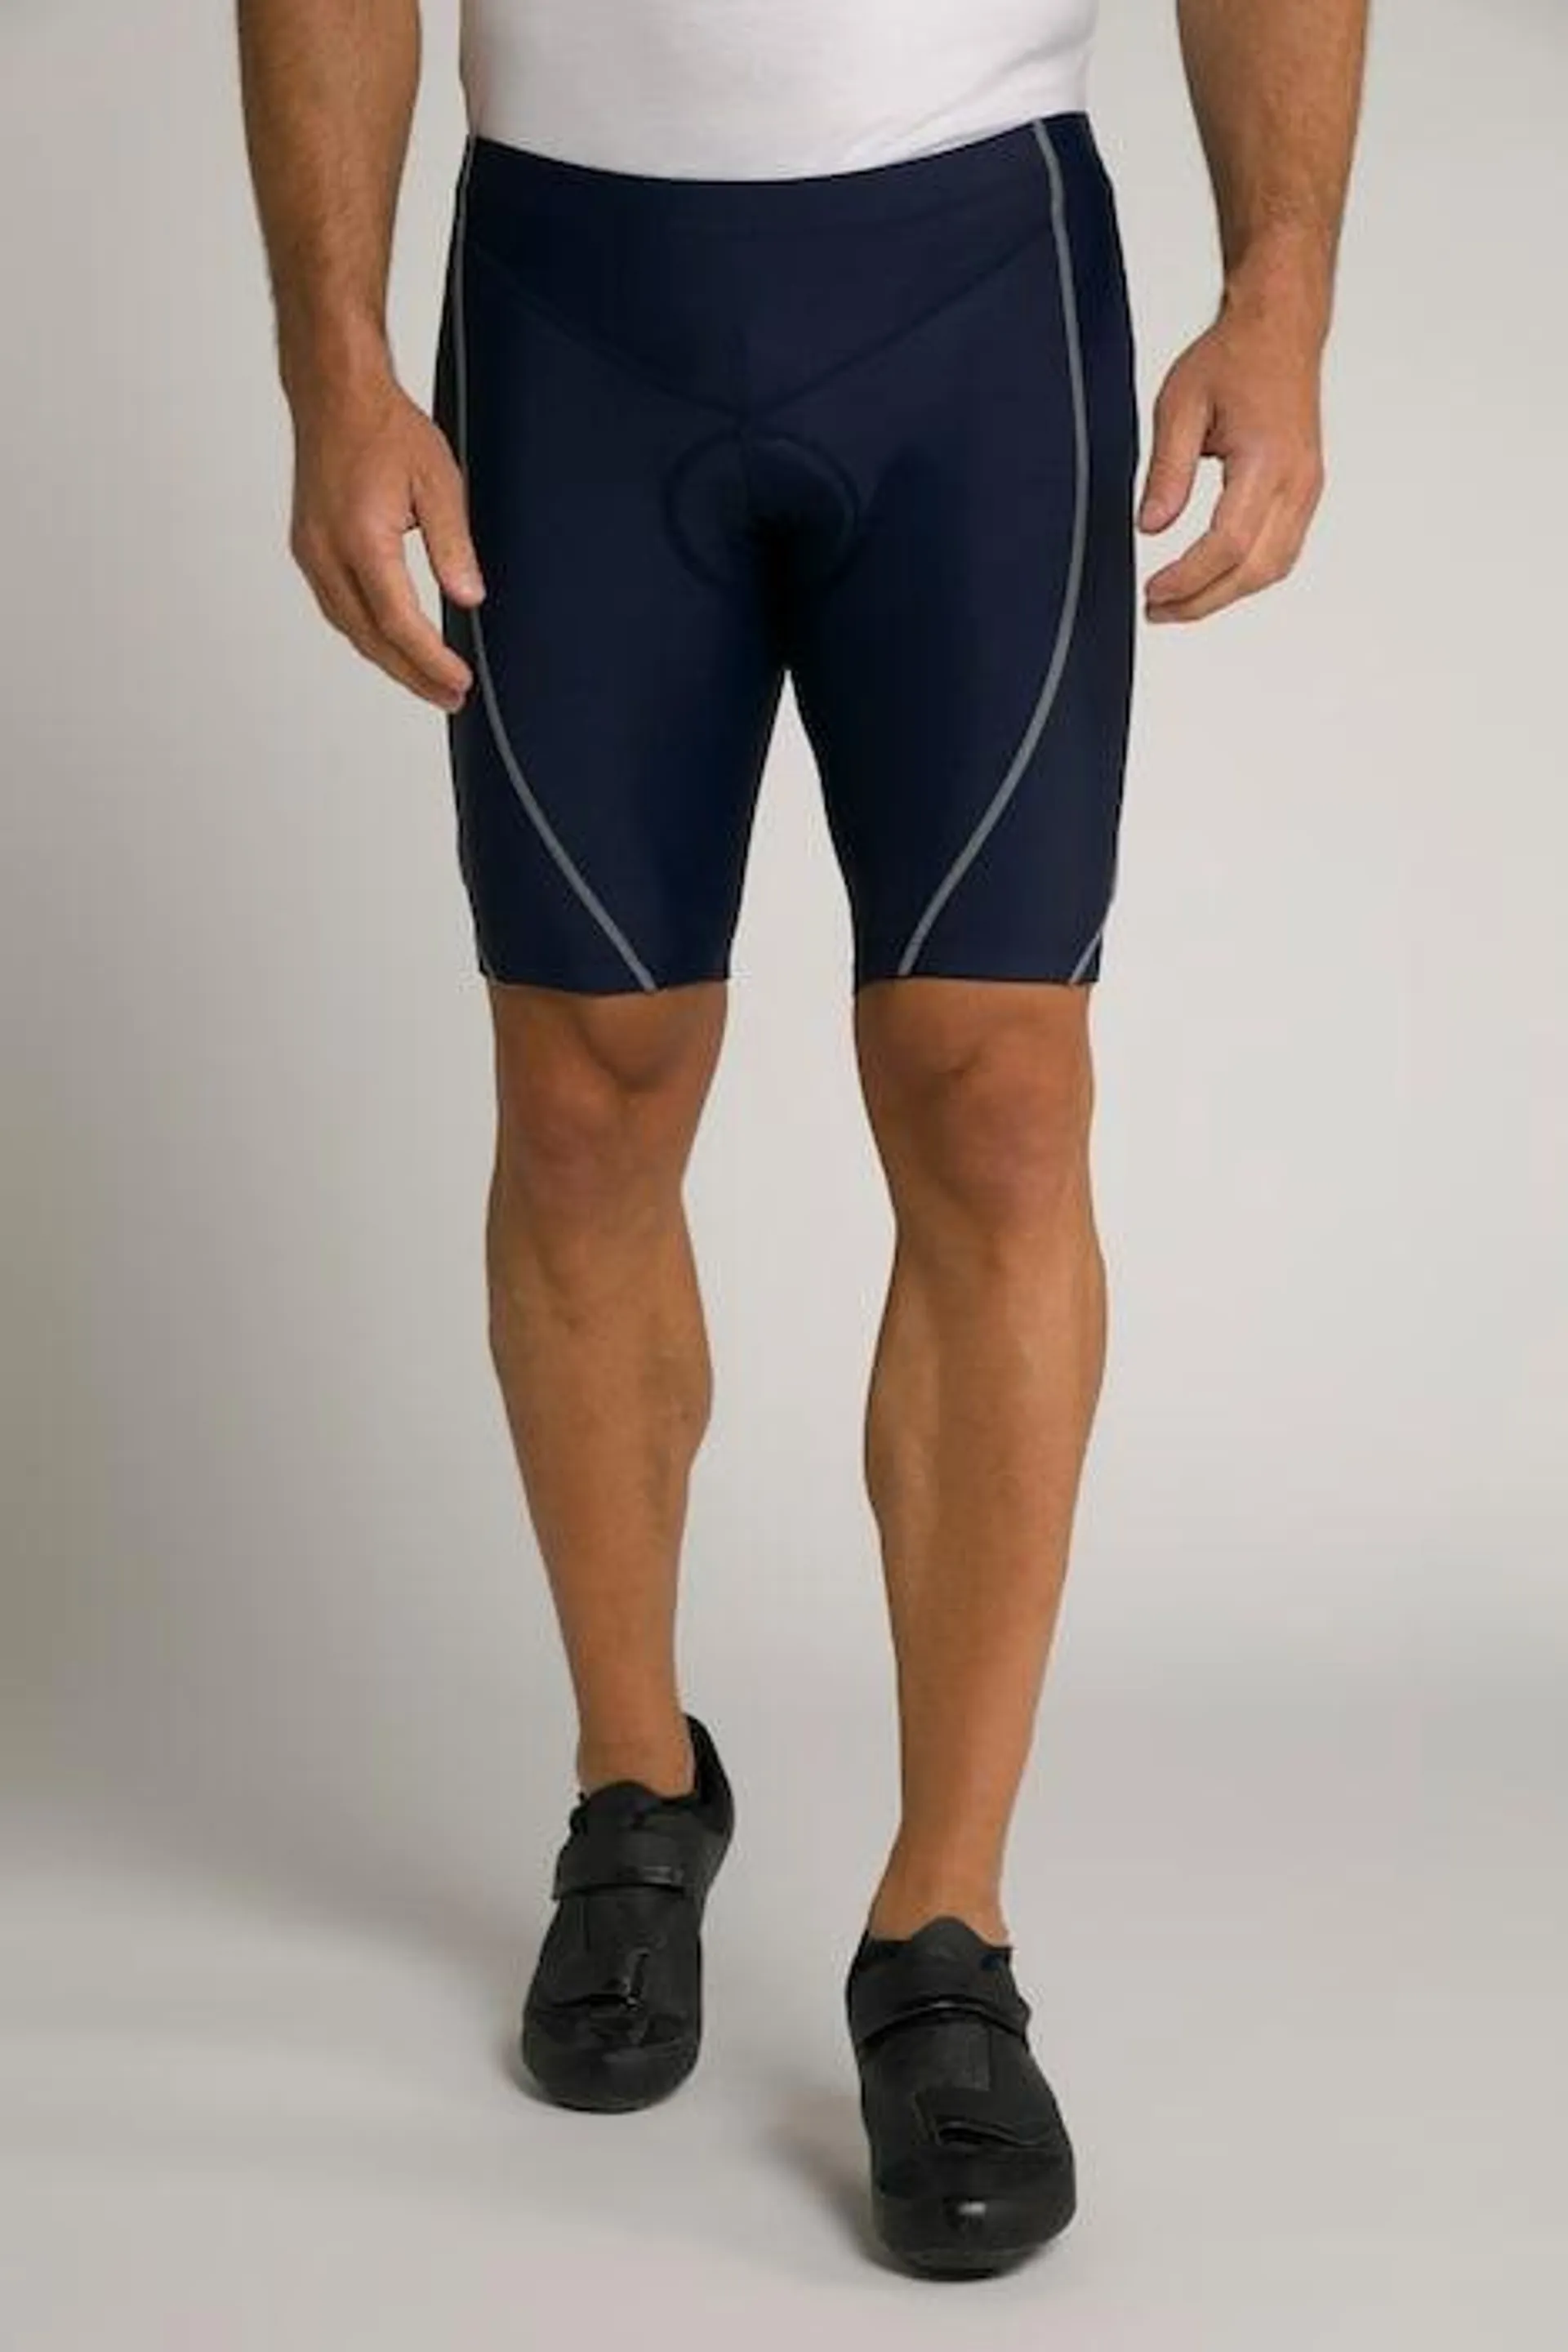 JAY-PI fietsbroek, bikewear, kort, top basic, gel comfort zitvulling, nauwsluitend